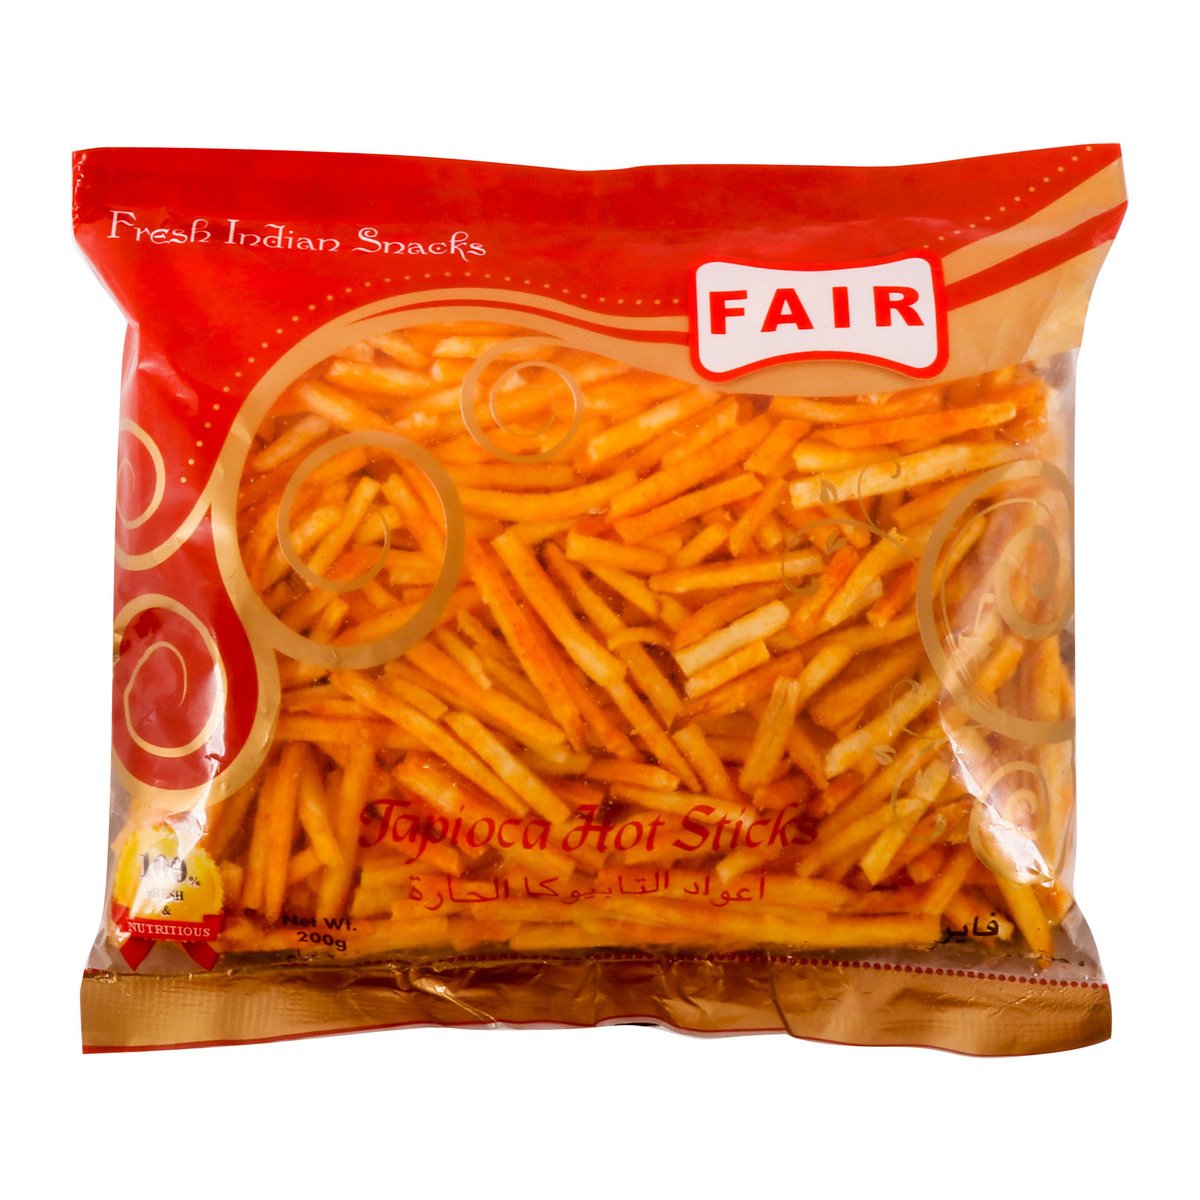 Fair Tapioca Hot Stick Chips 200 g